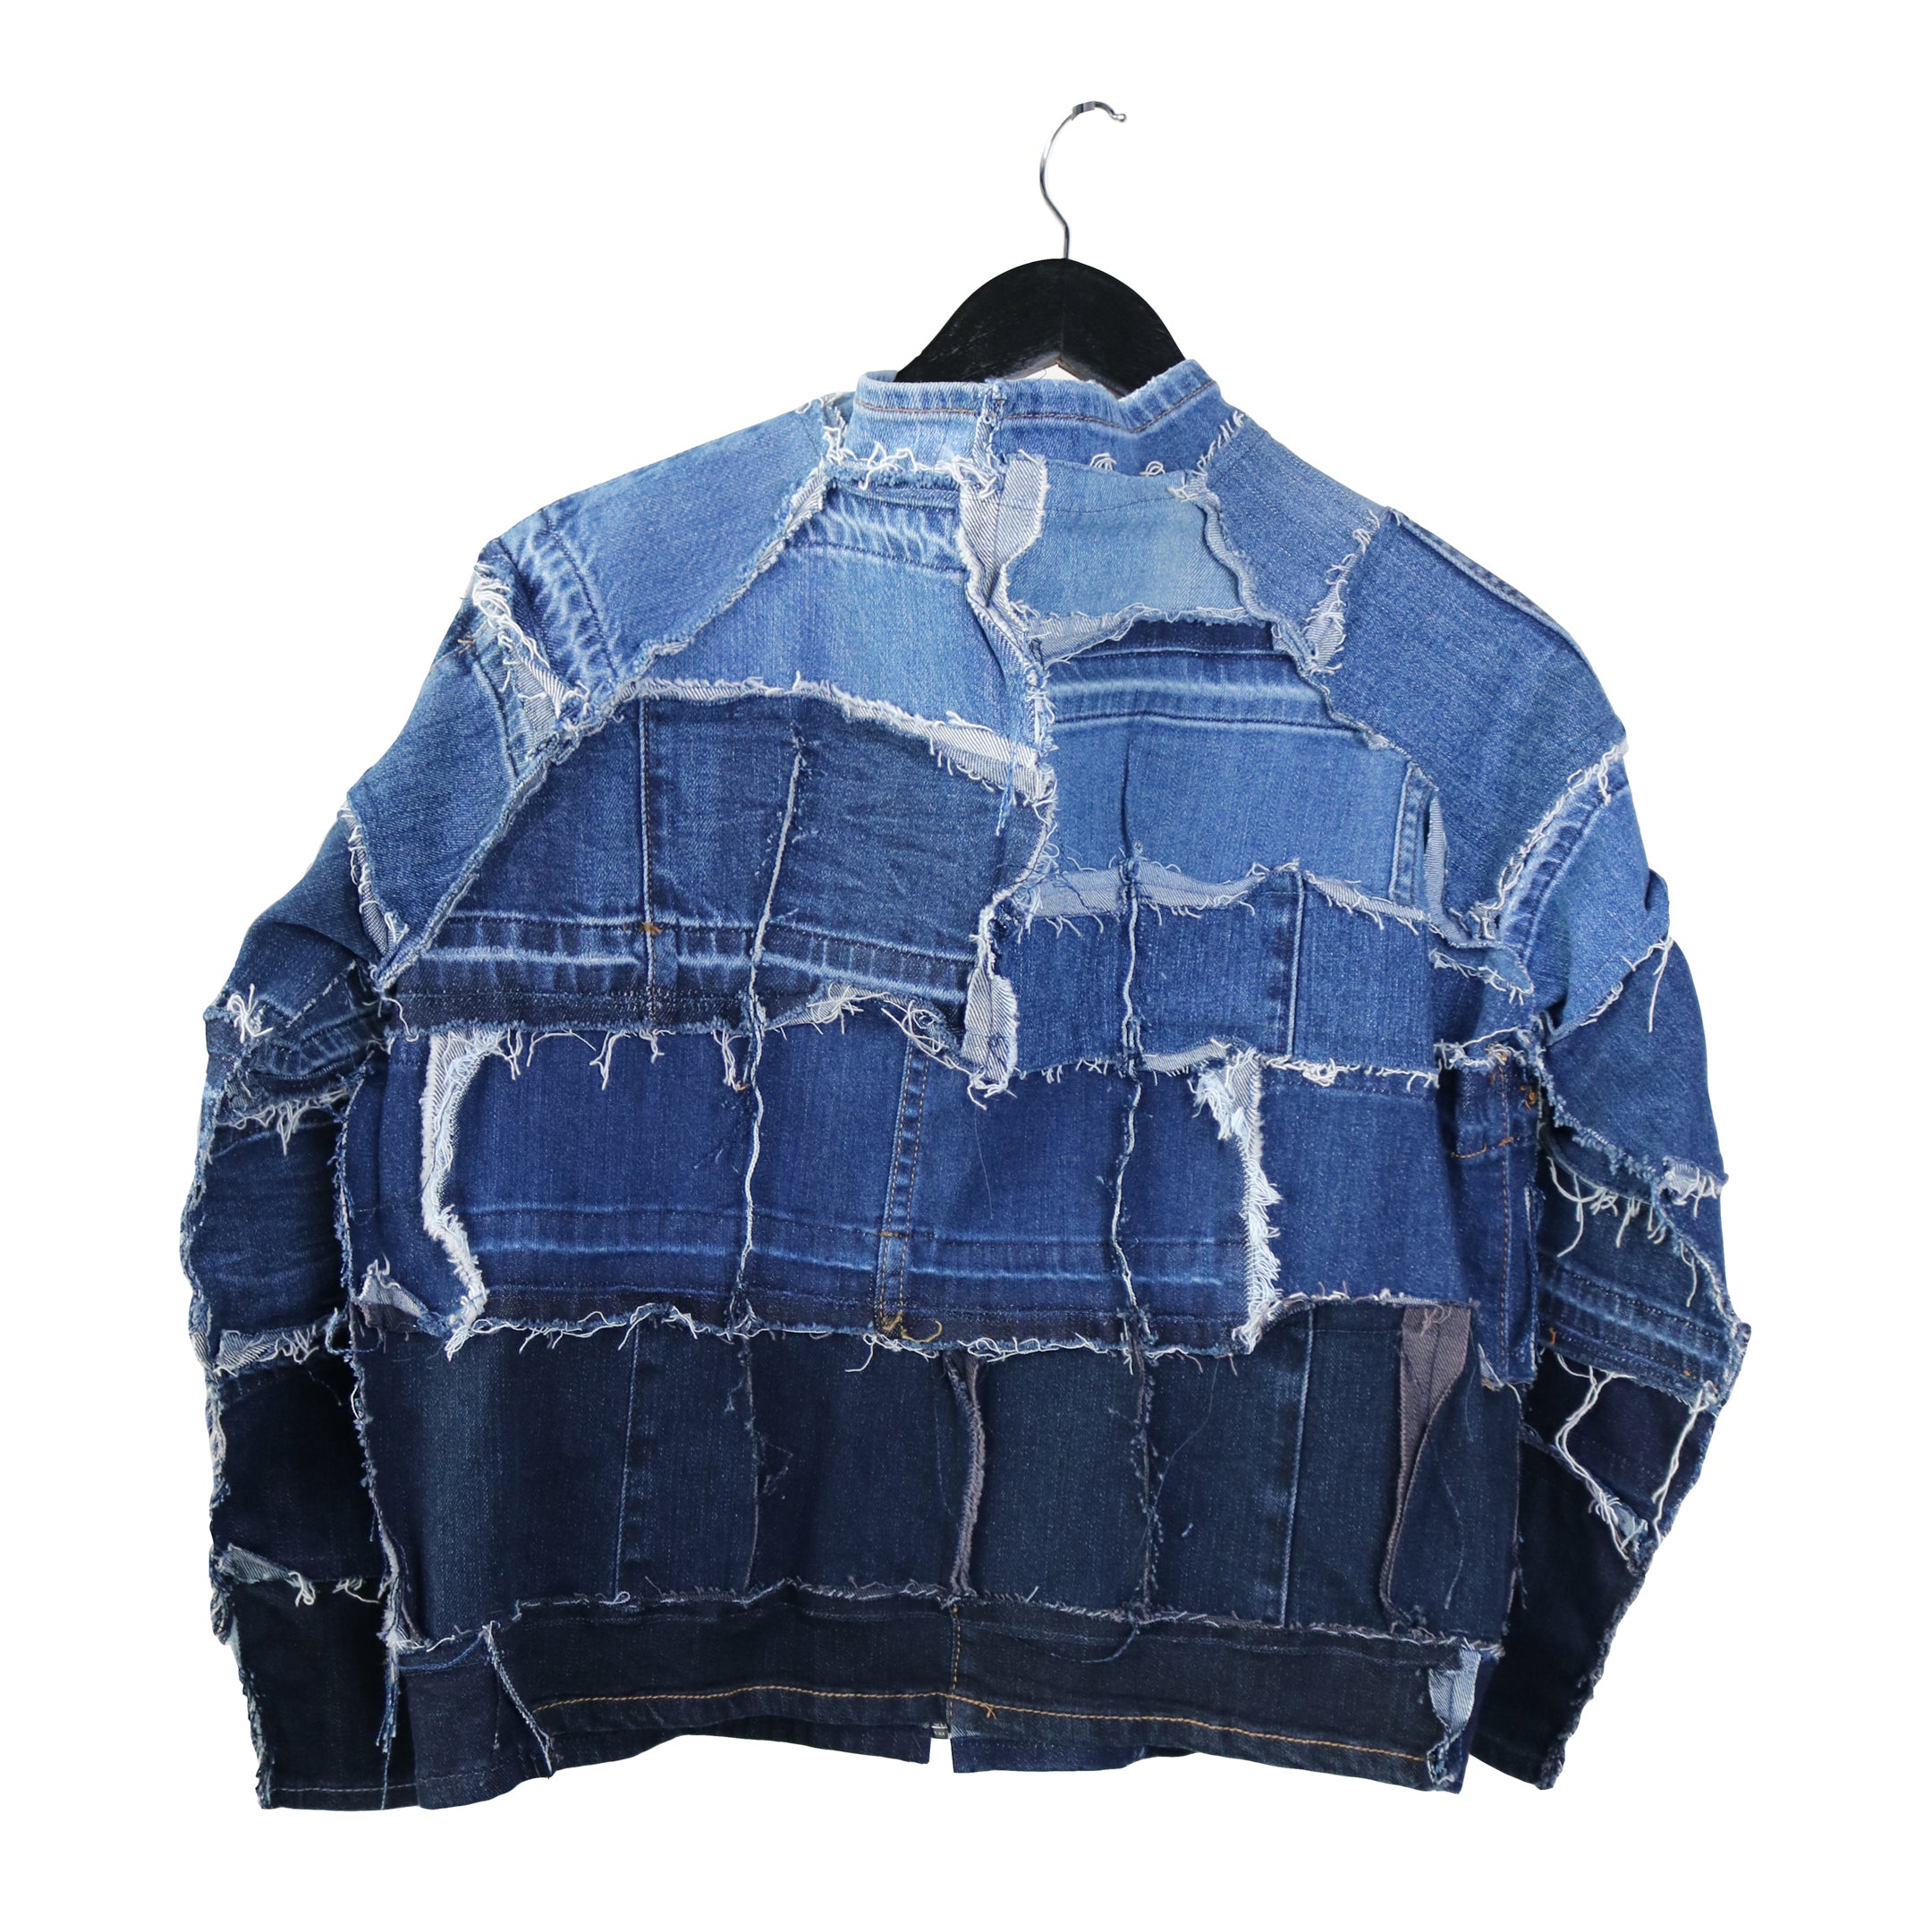 Dolce & Gabbana Distressed Patchwork Denim Jacket in Blue